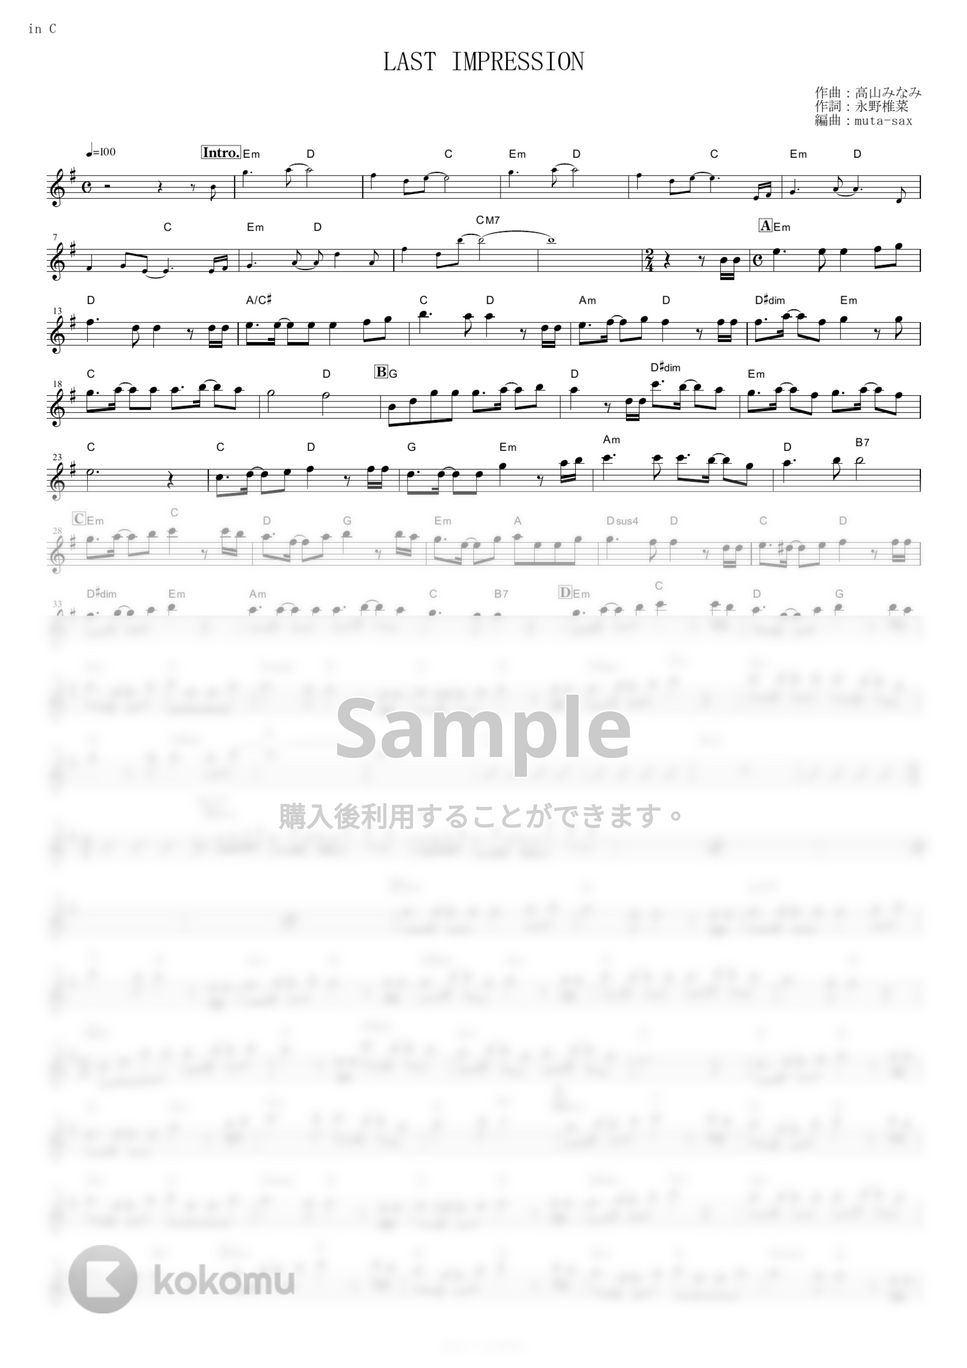 TWO-MIX - LAST IMPRESSION (『新機動戦記ガンダムW Endless Waltz 特別編』 / in C) by muta-sax